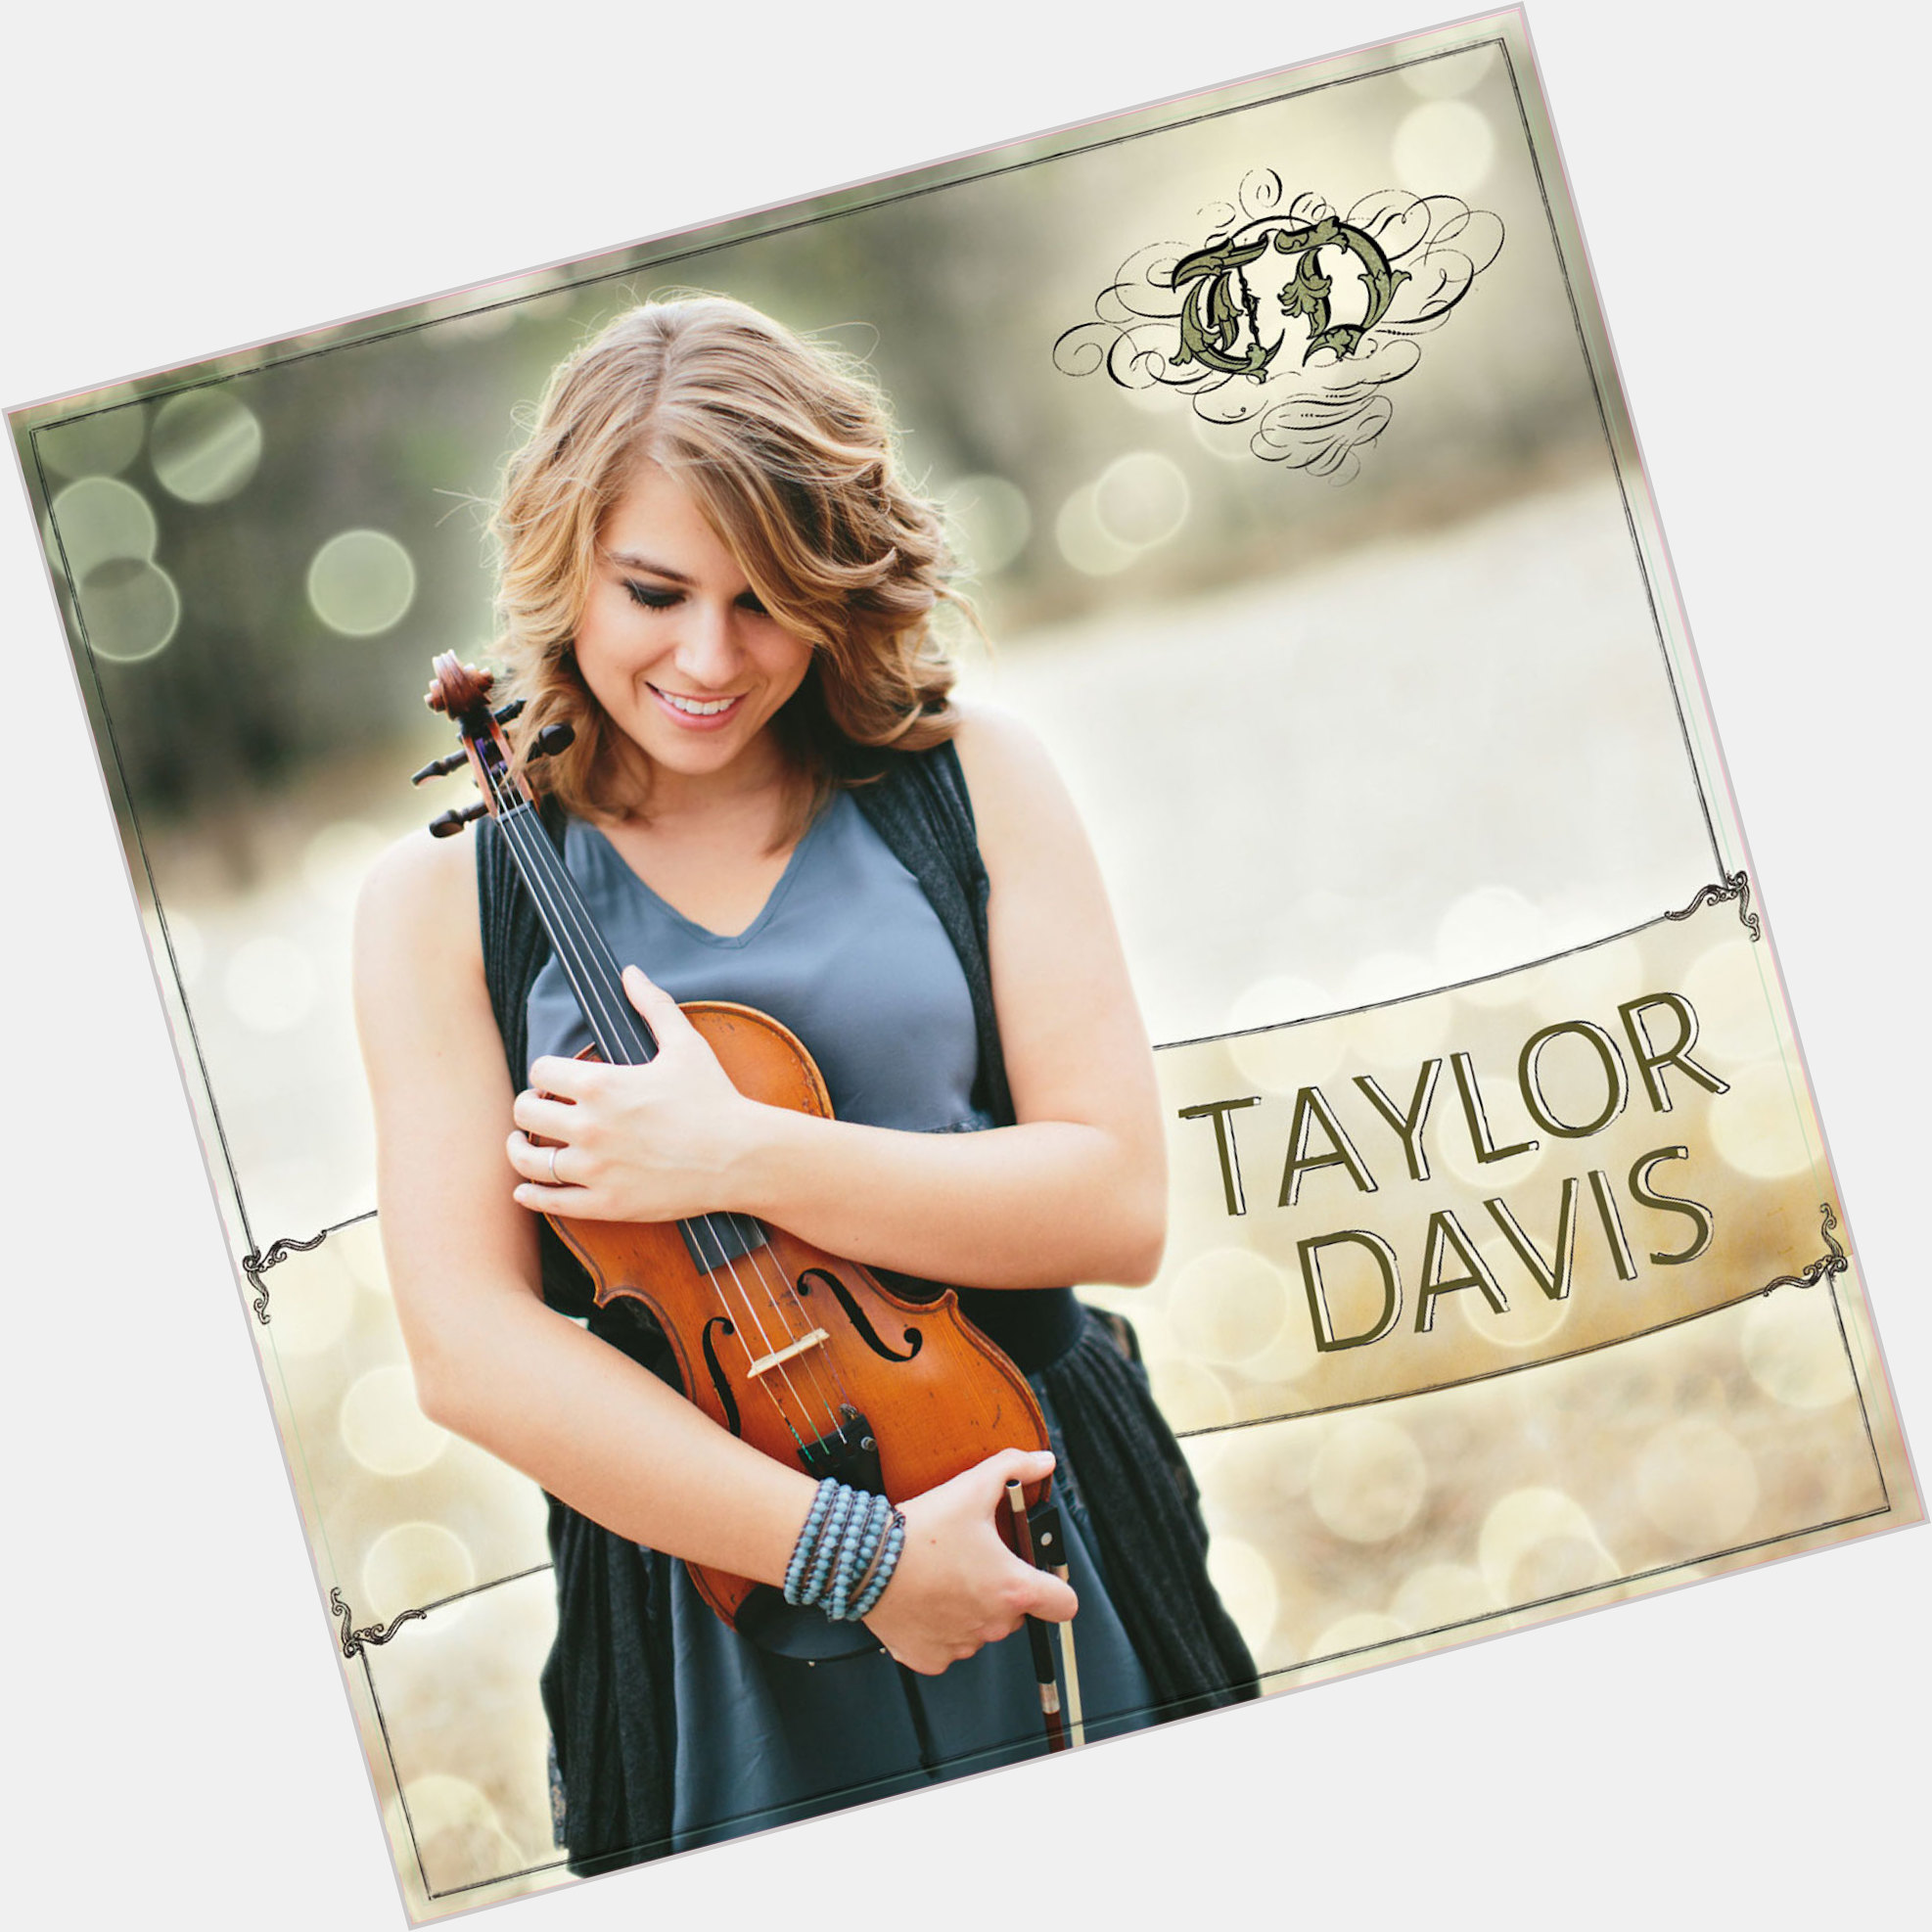 Taylor Davis marriage 4